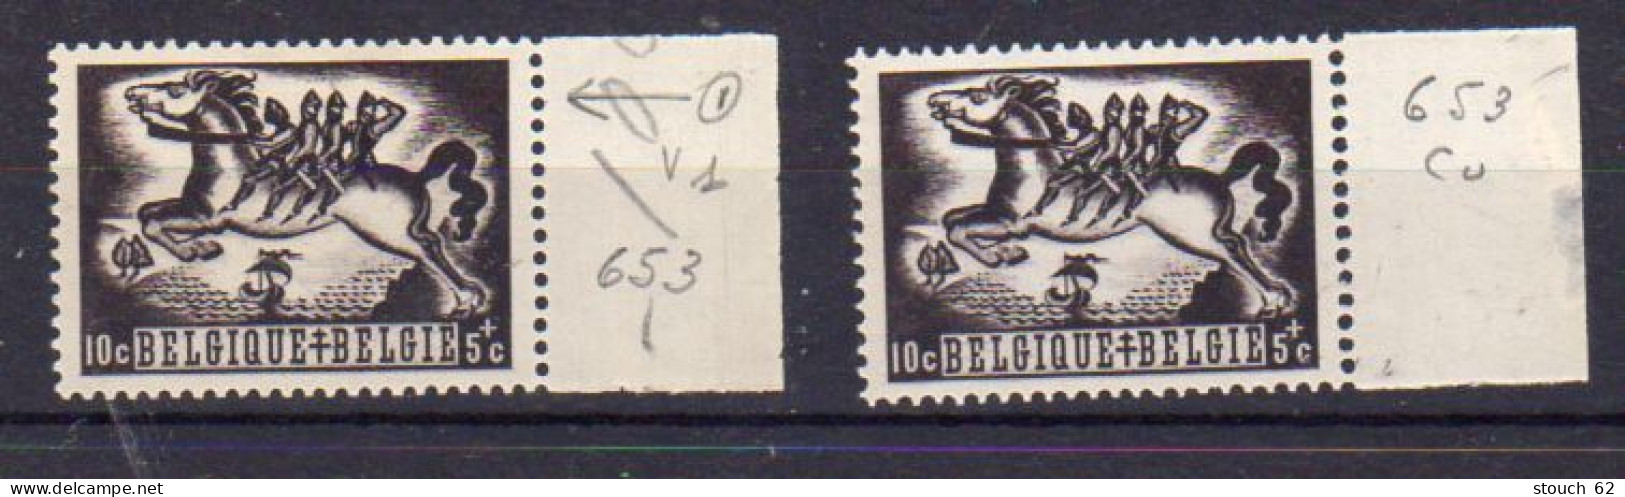 Del 12/05  2412 ++ Belgique 1944, Légendes Belges, Variété 653-V, - 1931-1960